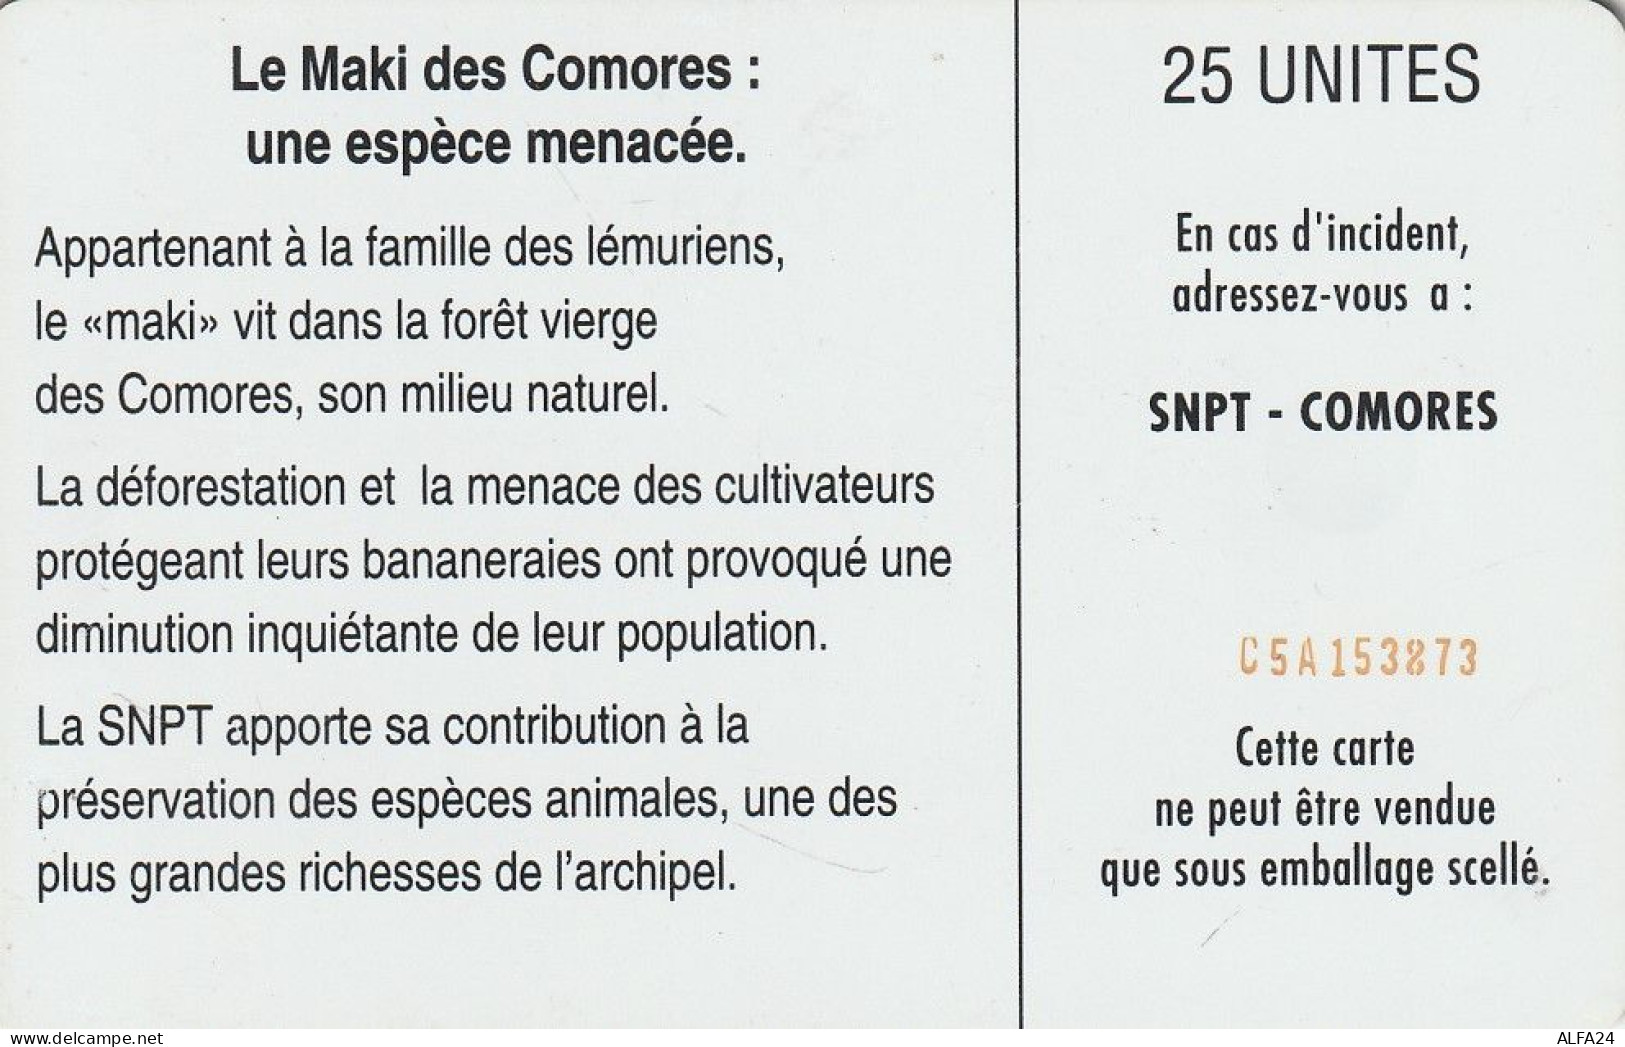 PHONE CARD COMORES  (E3.3.3 - Comoros